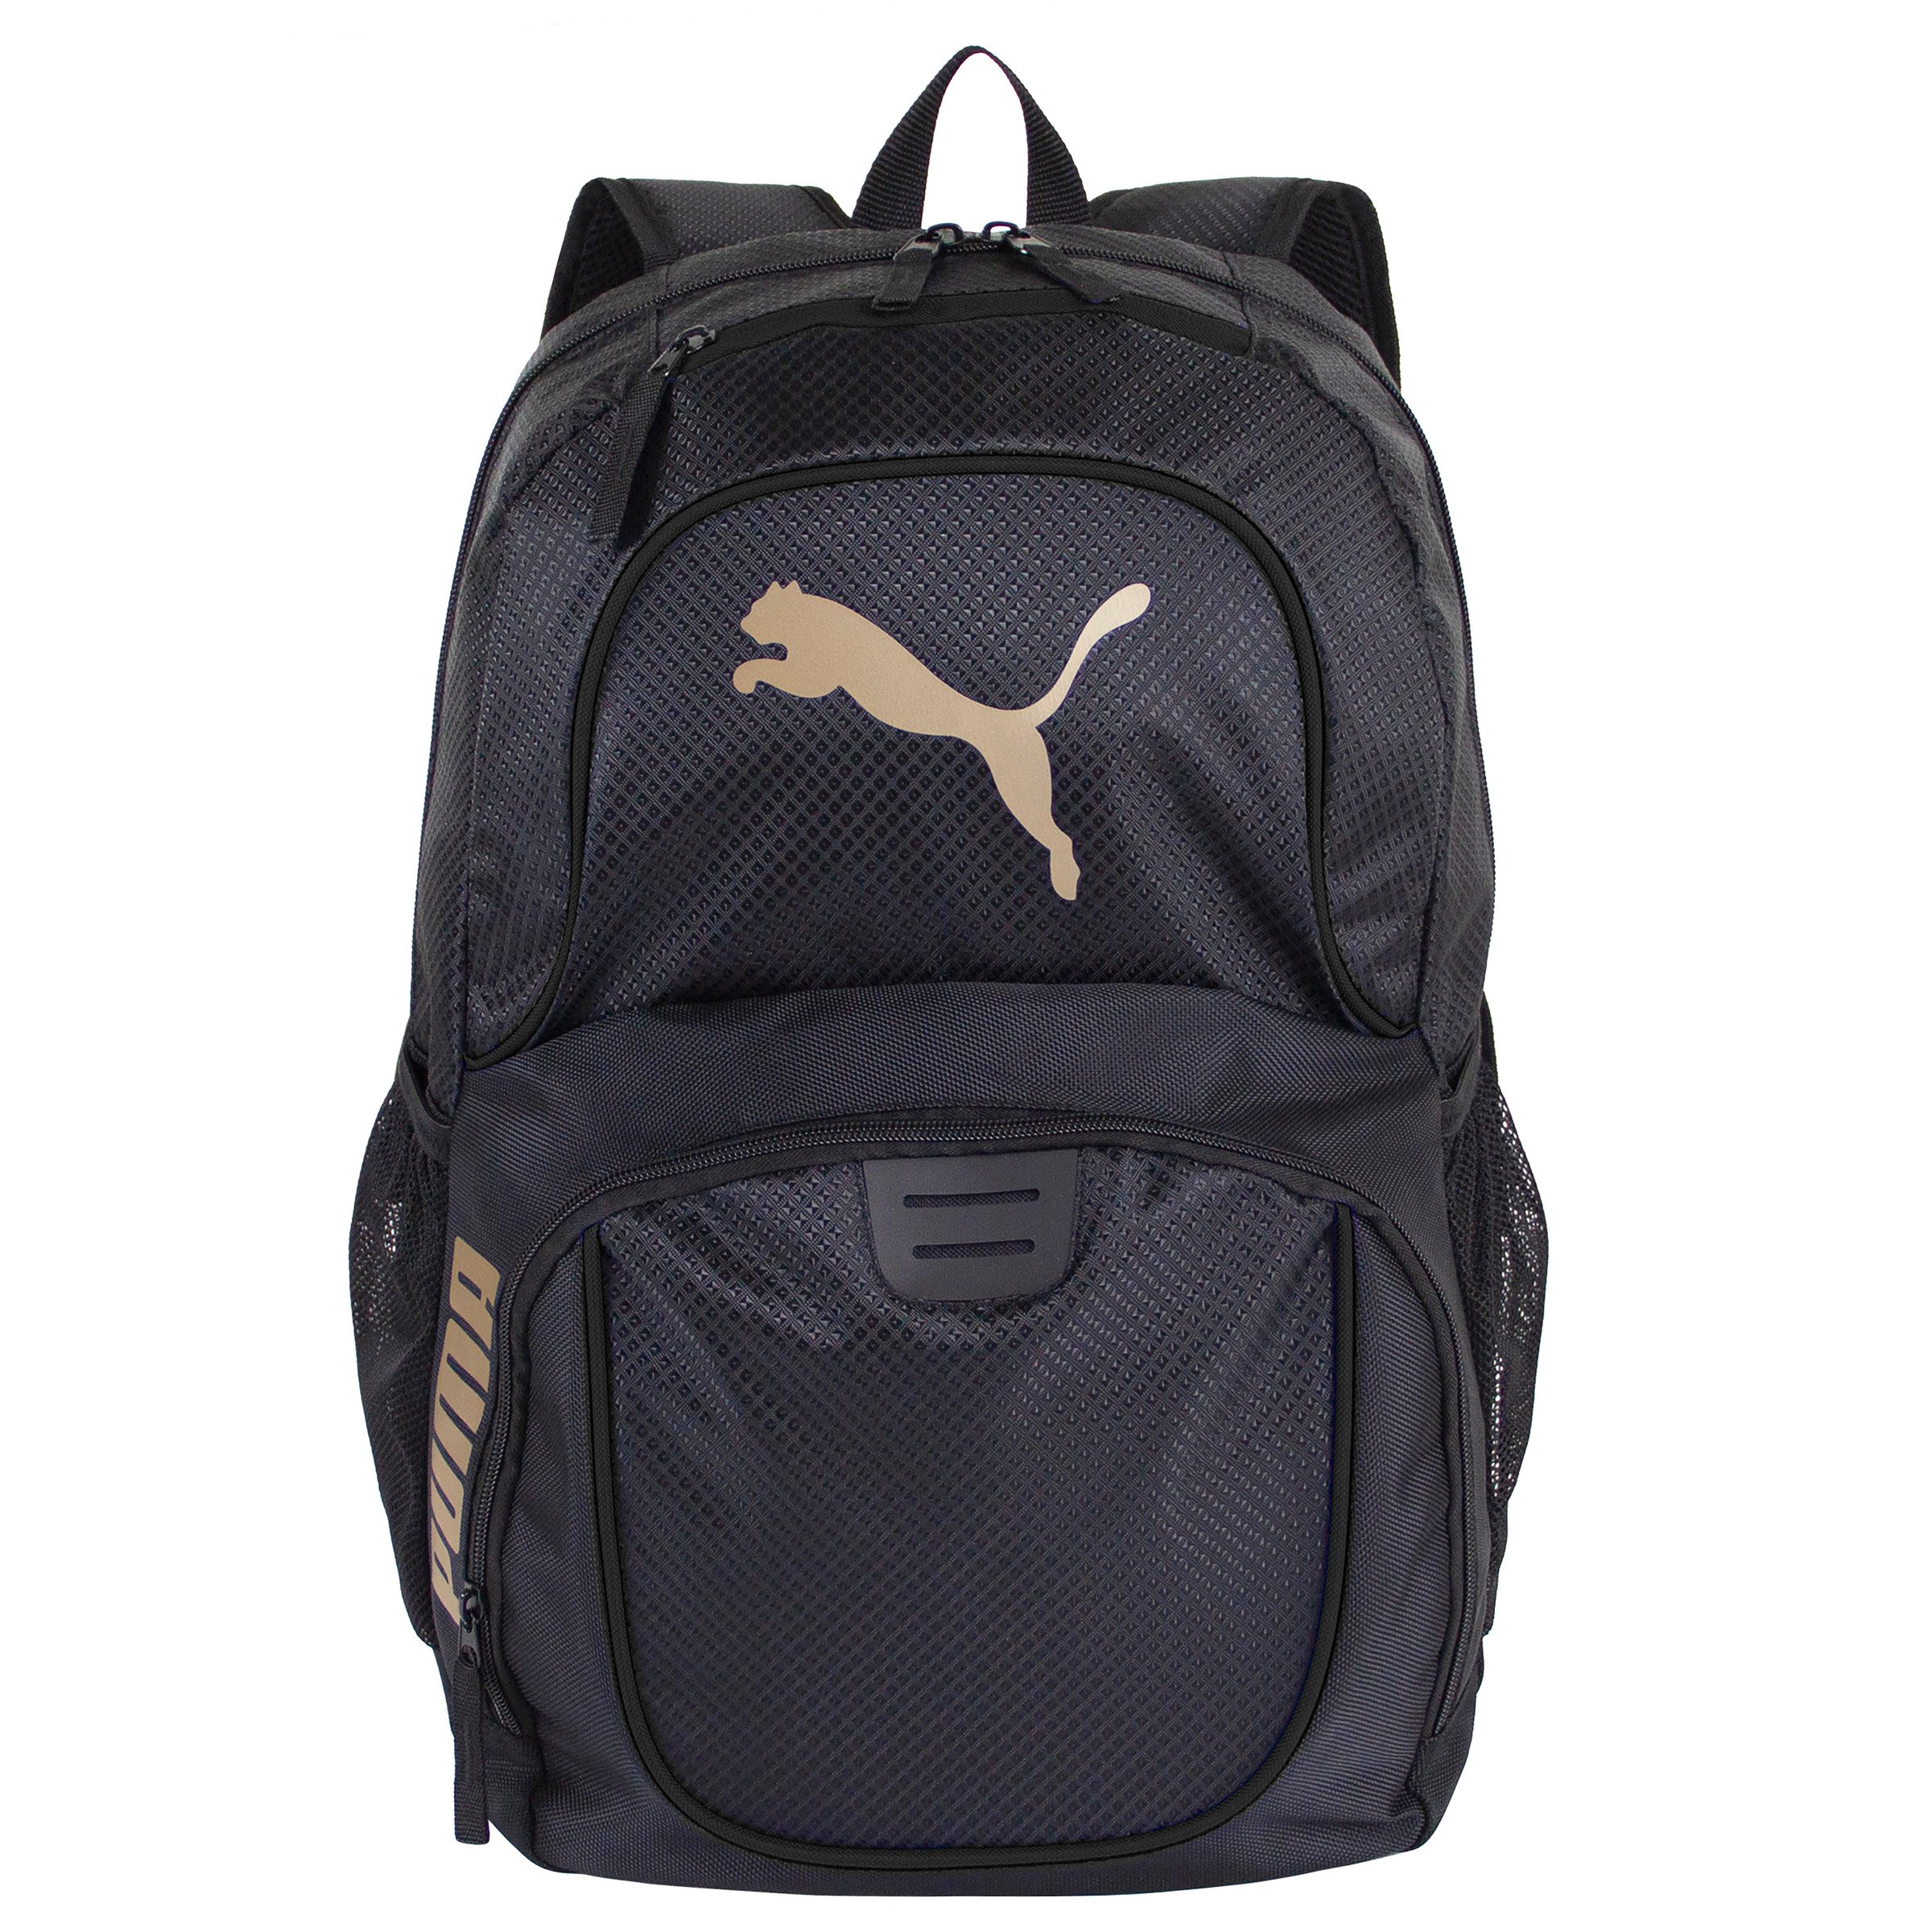 Puma Contender Black \u0026 Gold Backpack 